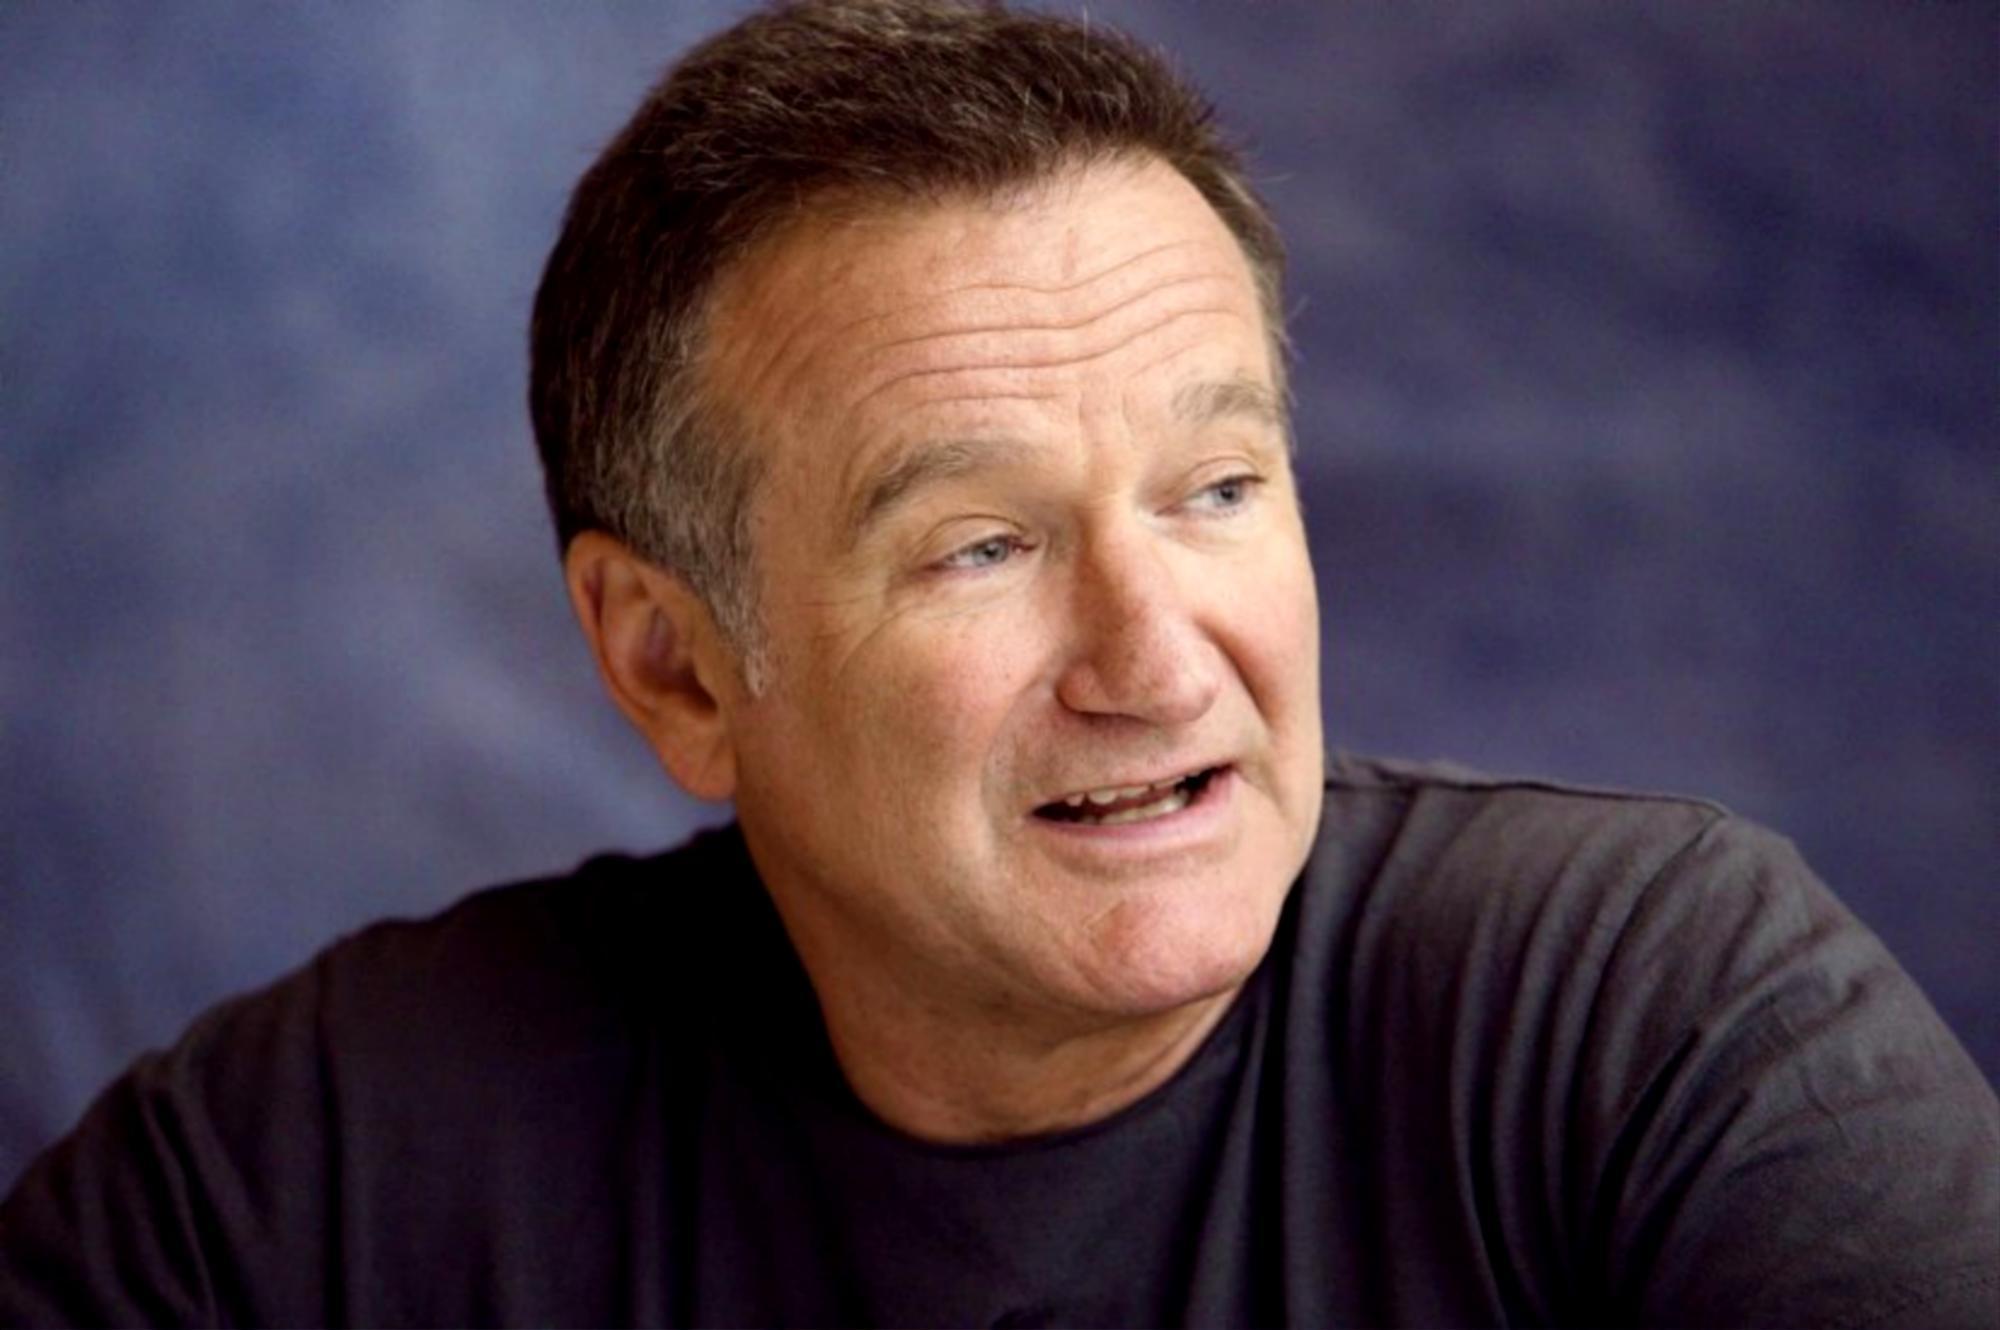 Robin-Williams.jpg